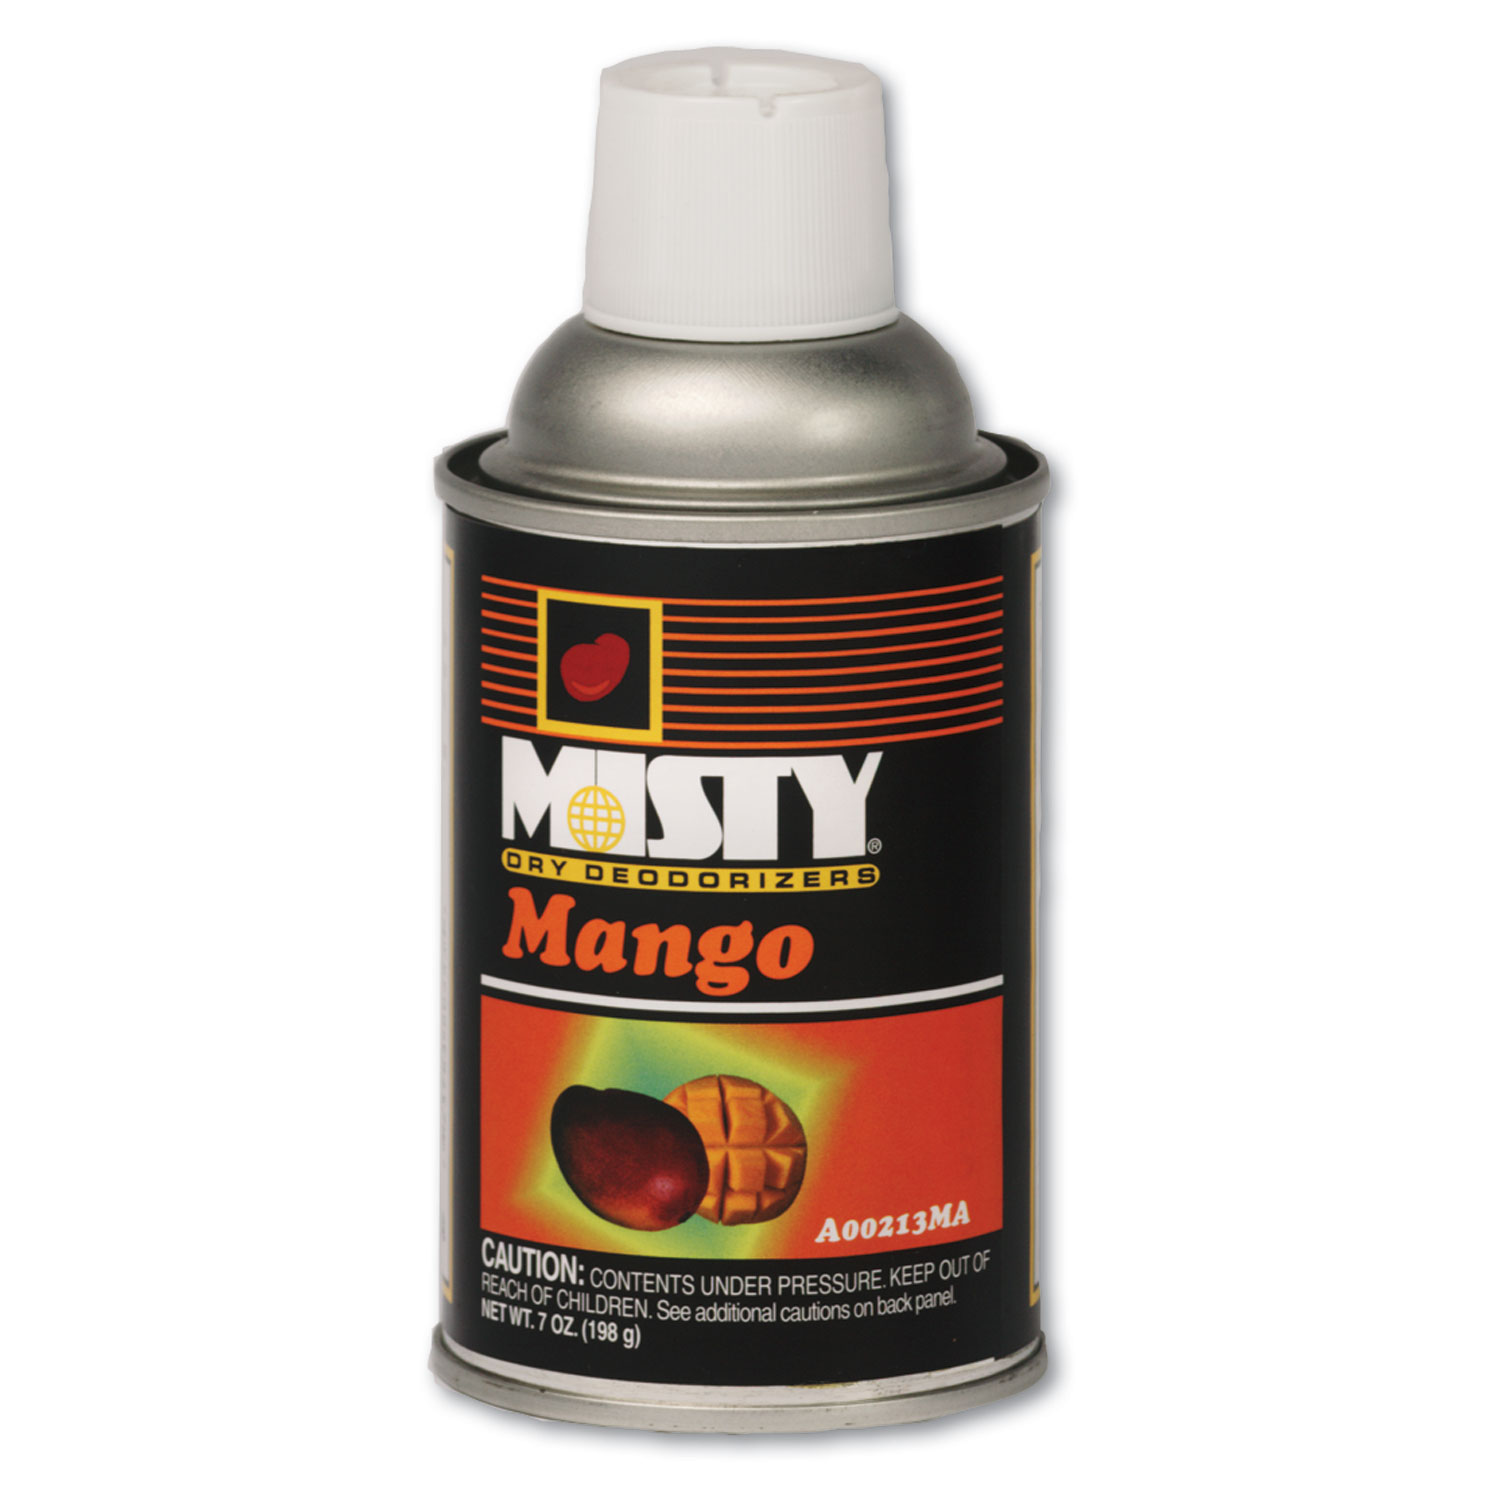  Misty 1021970 Metered Dry Deodorizer Refills, Mango, 7 oz Aerosol, 12/Carton (AMR1021970) 